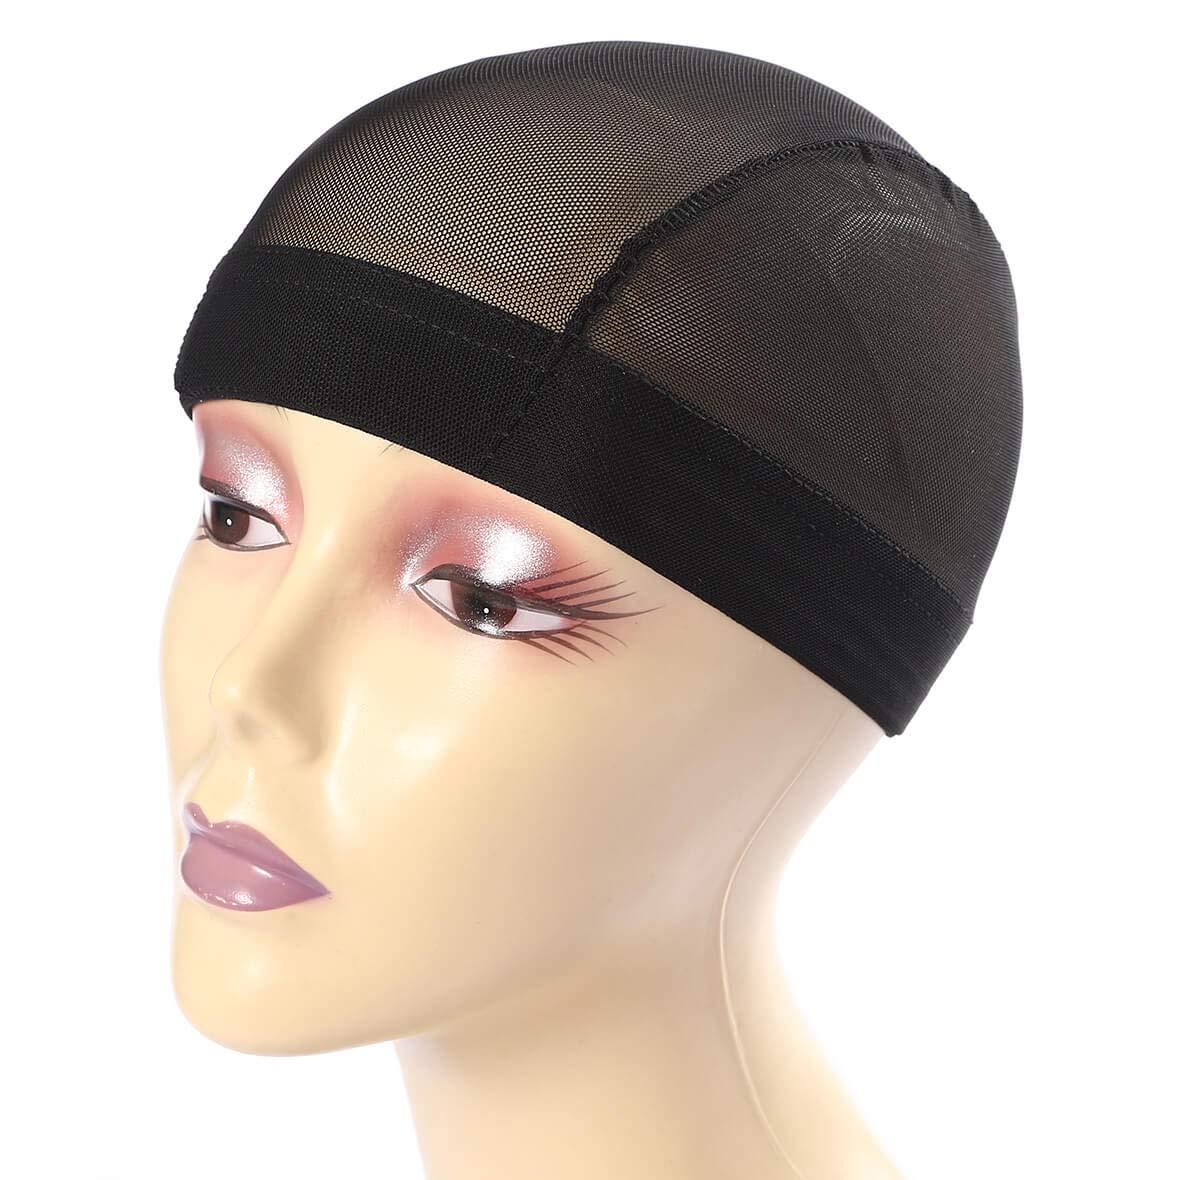 Leeven 5 Pcs/lot Black Wig Caps For Women Breathable Nylon Wig